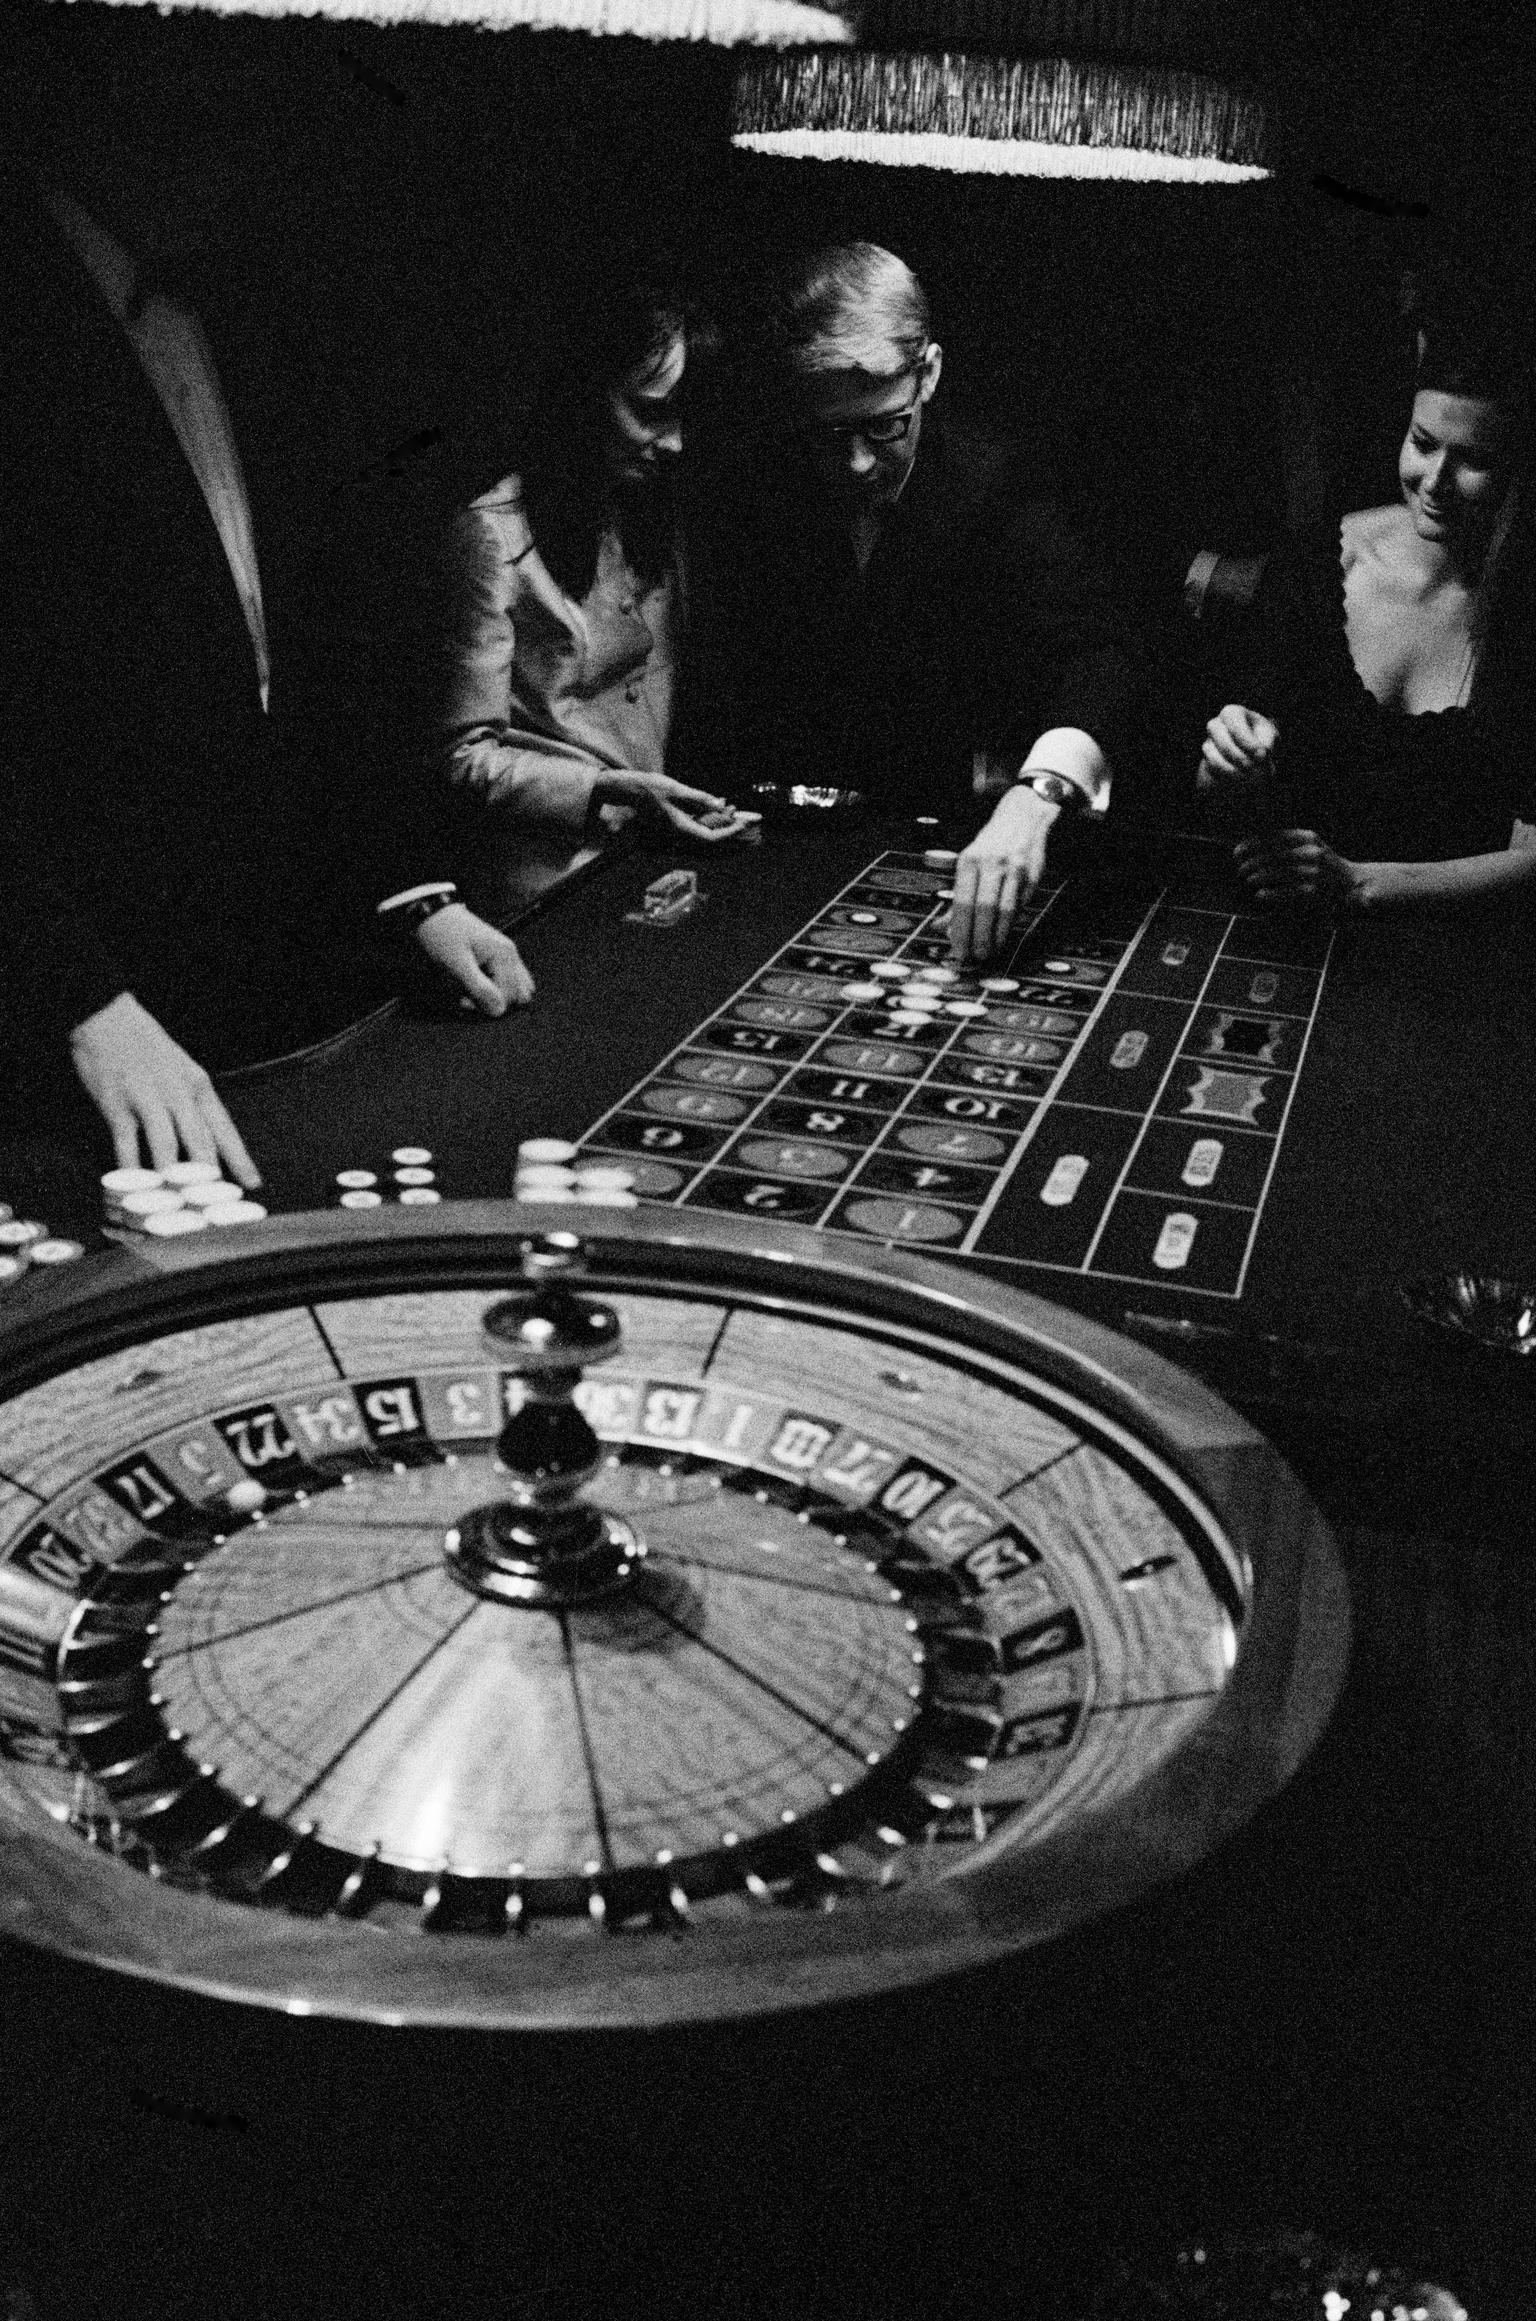 Aspinall's private gambling club. London, UK